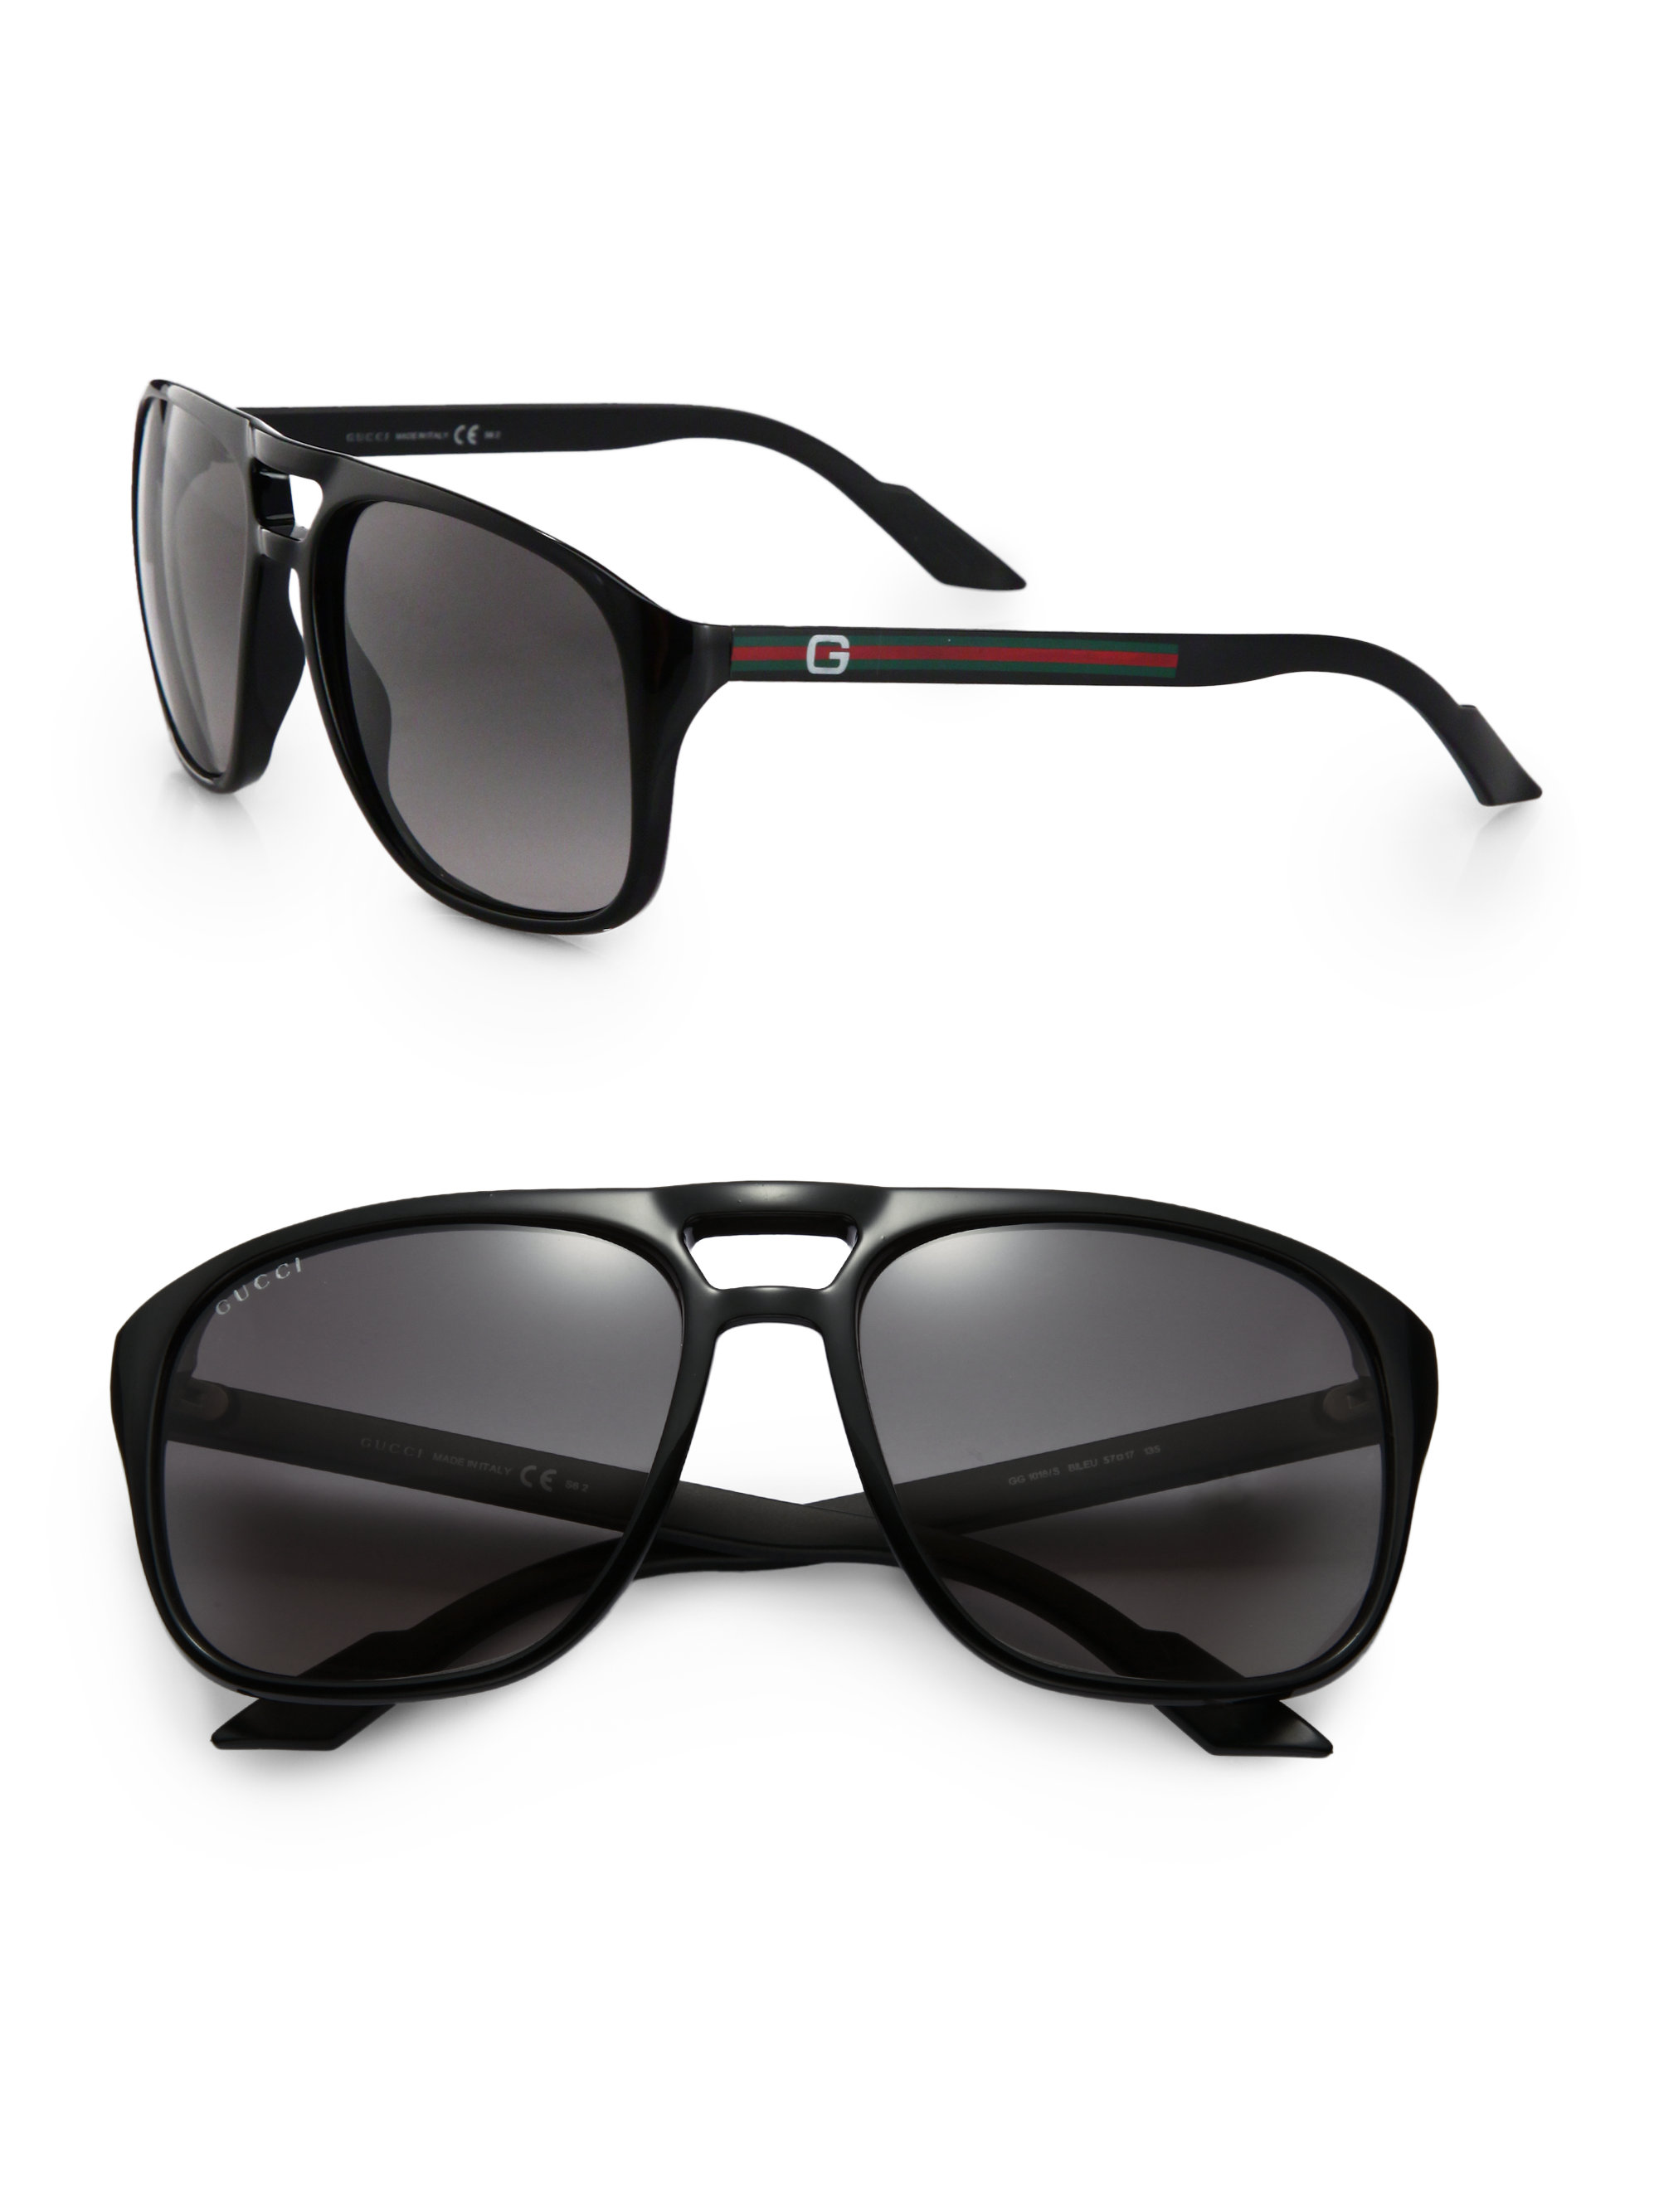 gucci men's aviator acetate sunglasses